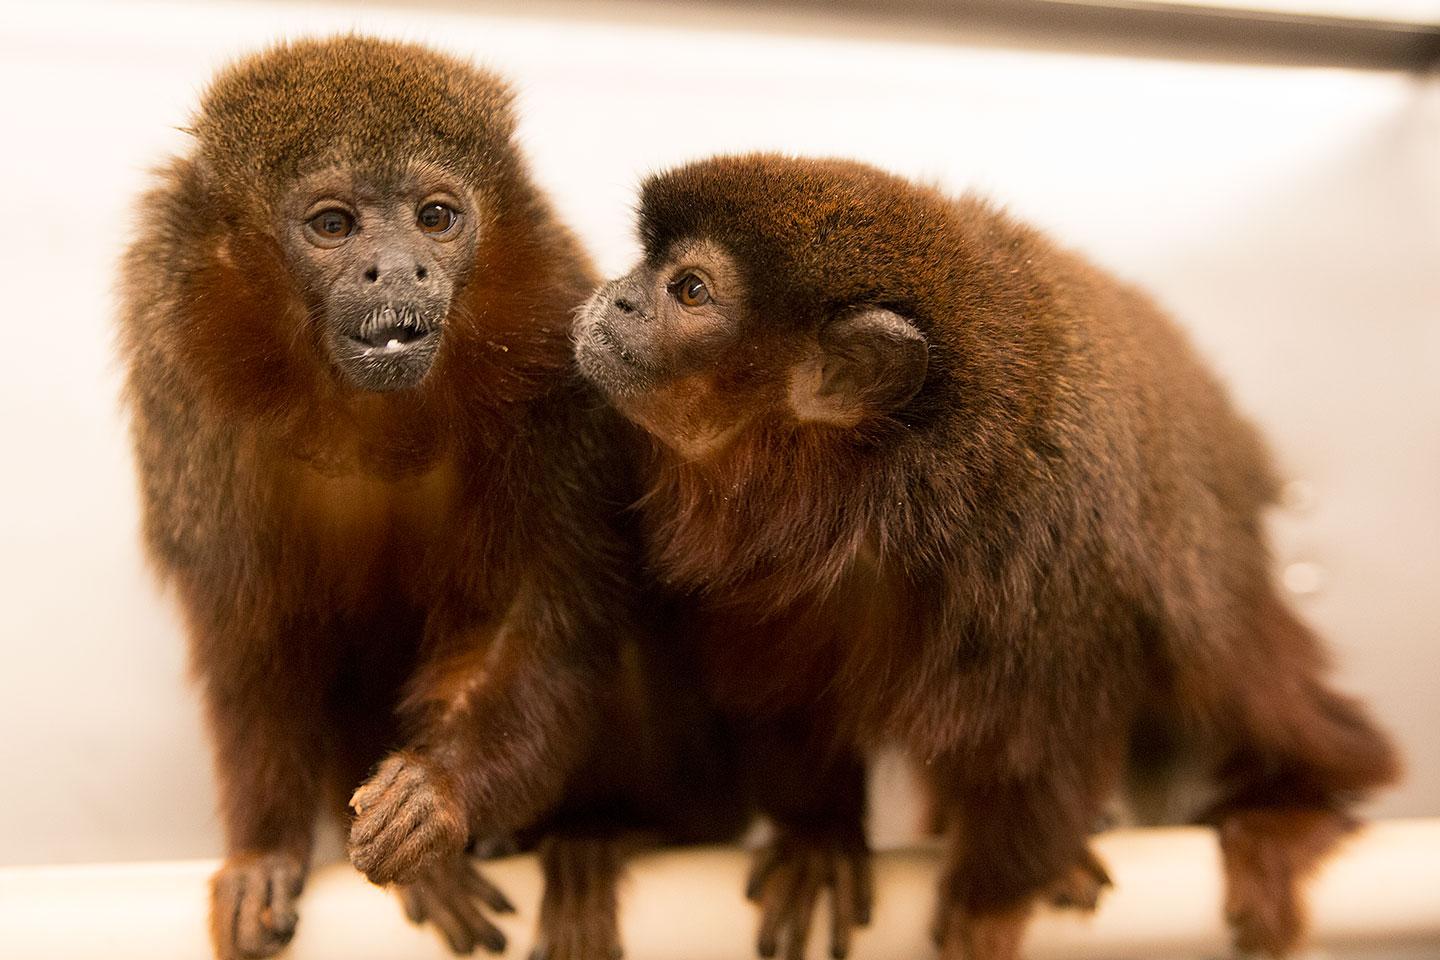 Pair-Bonded Titi Monkeys